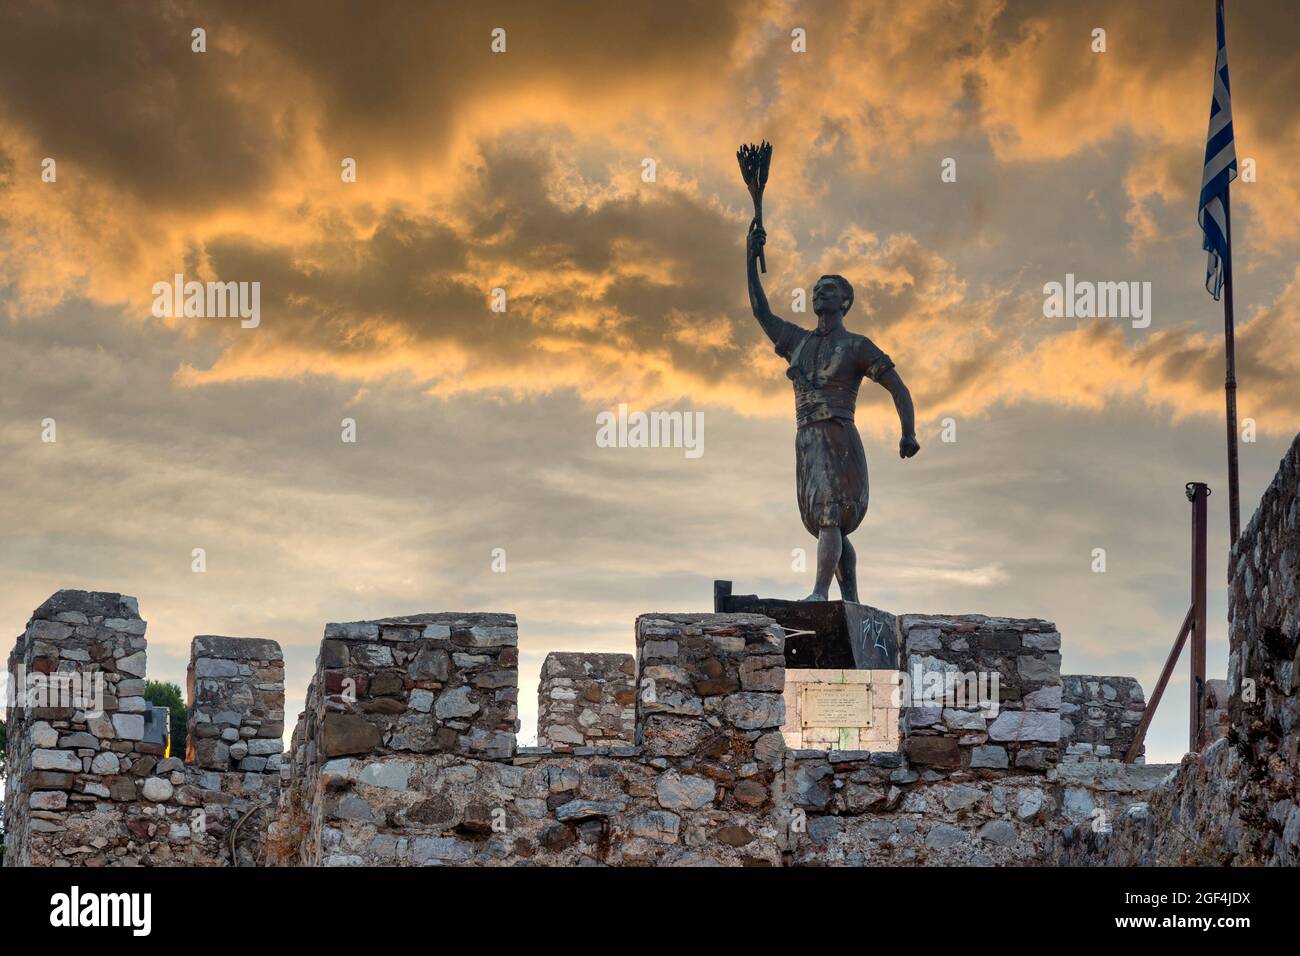 Statue of Georgios Anemogiannis, a hero of the Greek Independence War (1821), in Nafpaktos city, Etoloakarnania region, Greece, Europe. Stock Photo